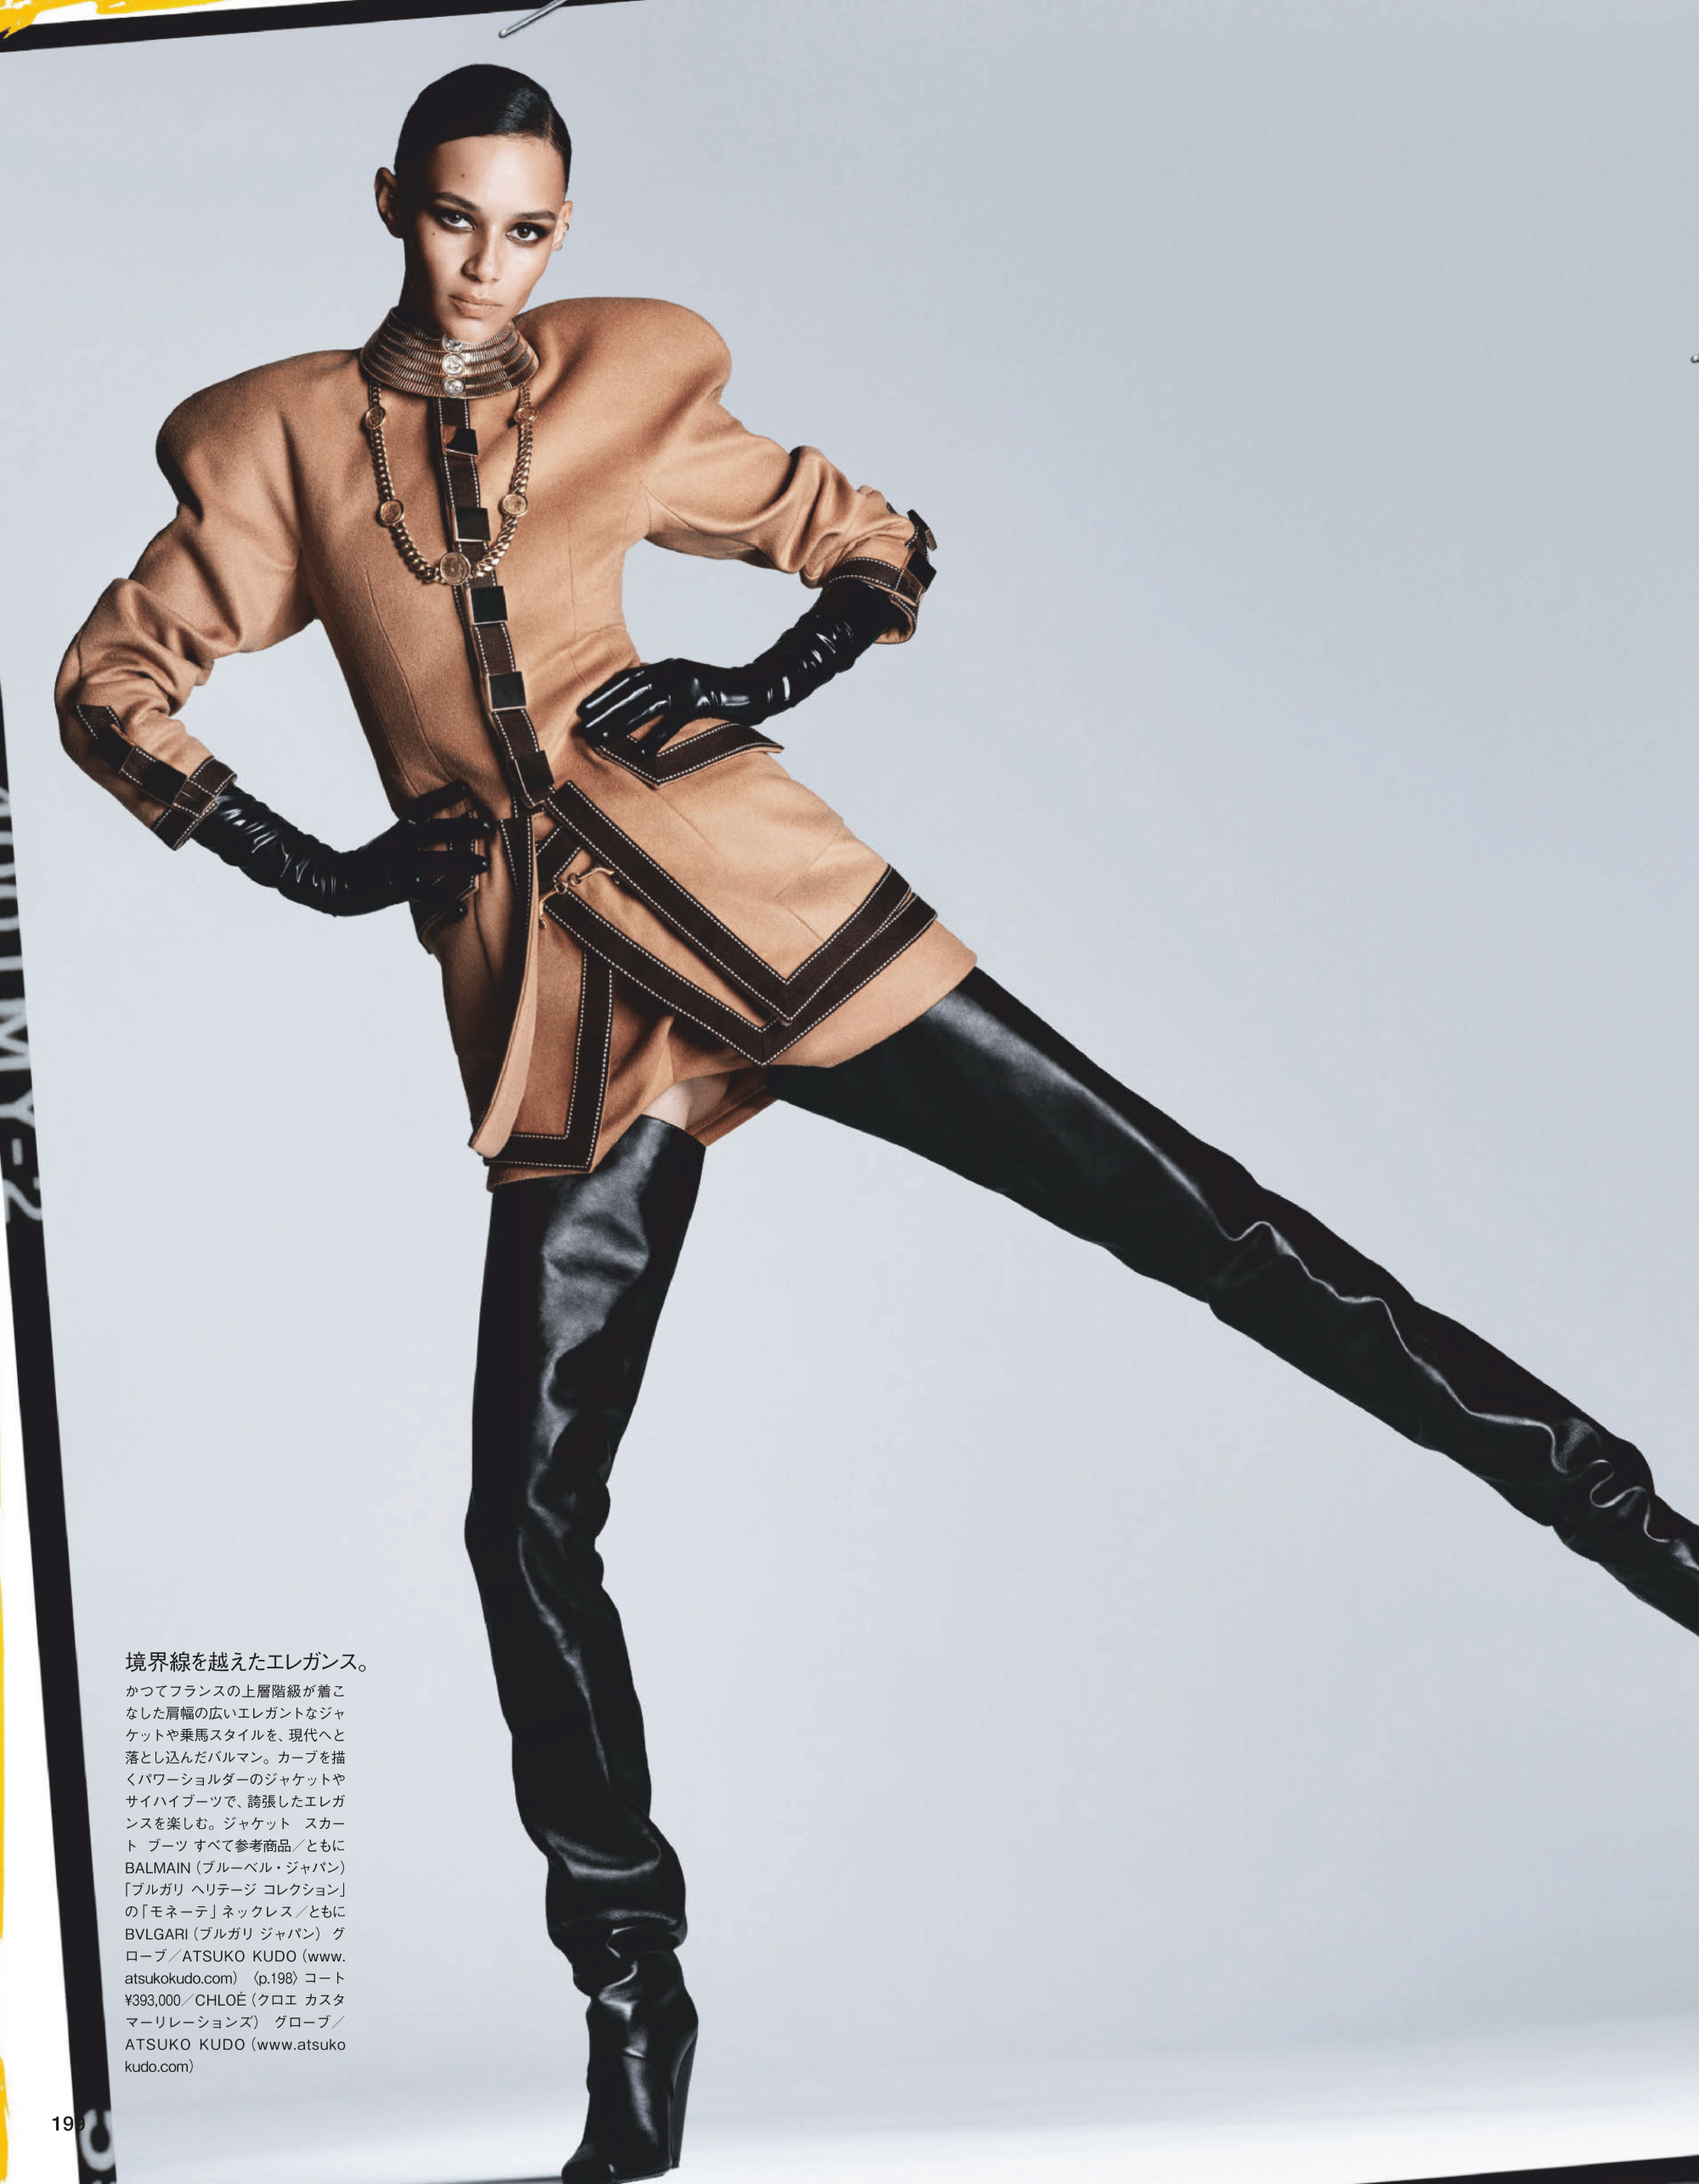 Luigi Iango 'Sketch Book Style' in Vogue Japan Oct 2020 (7).png